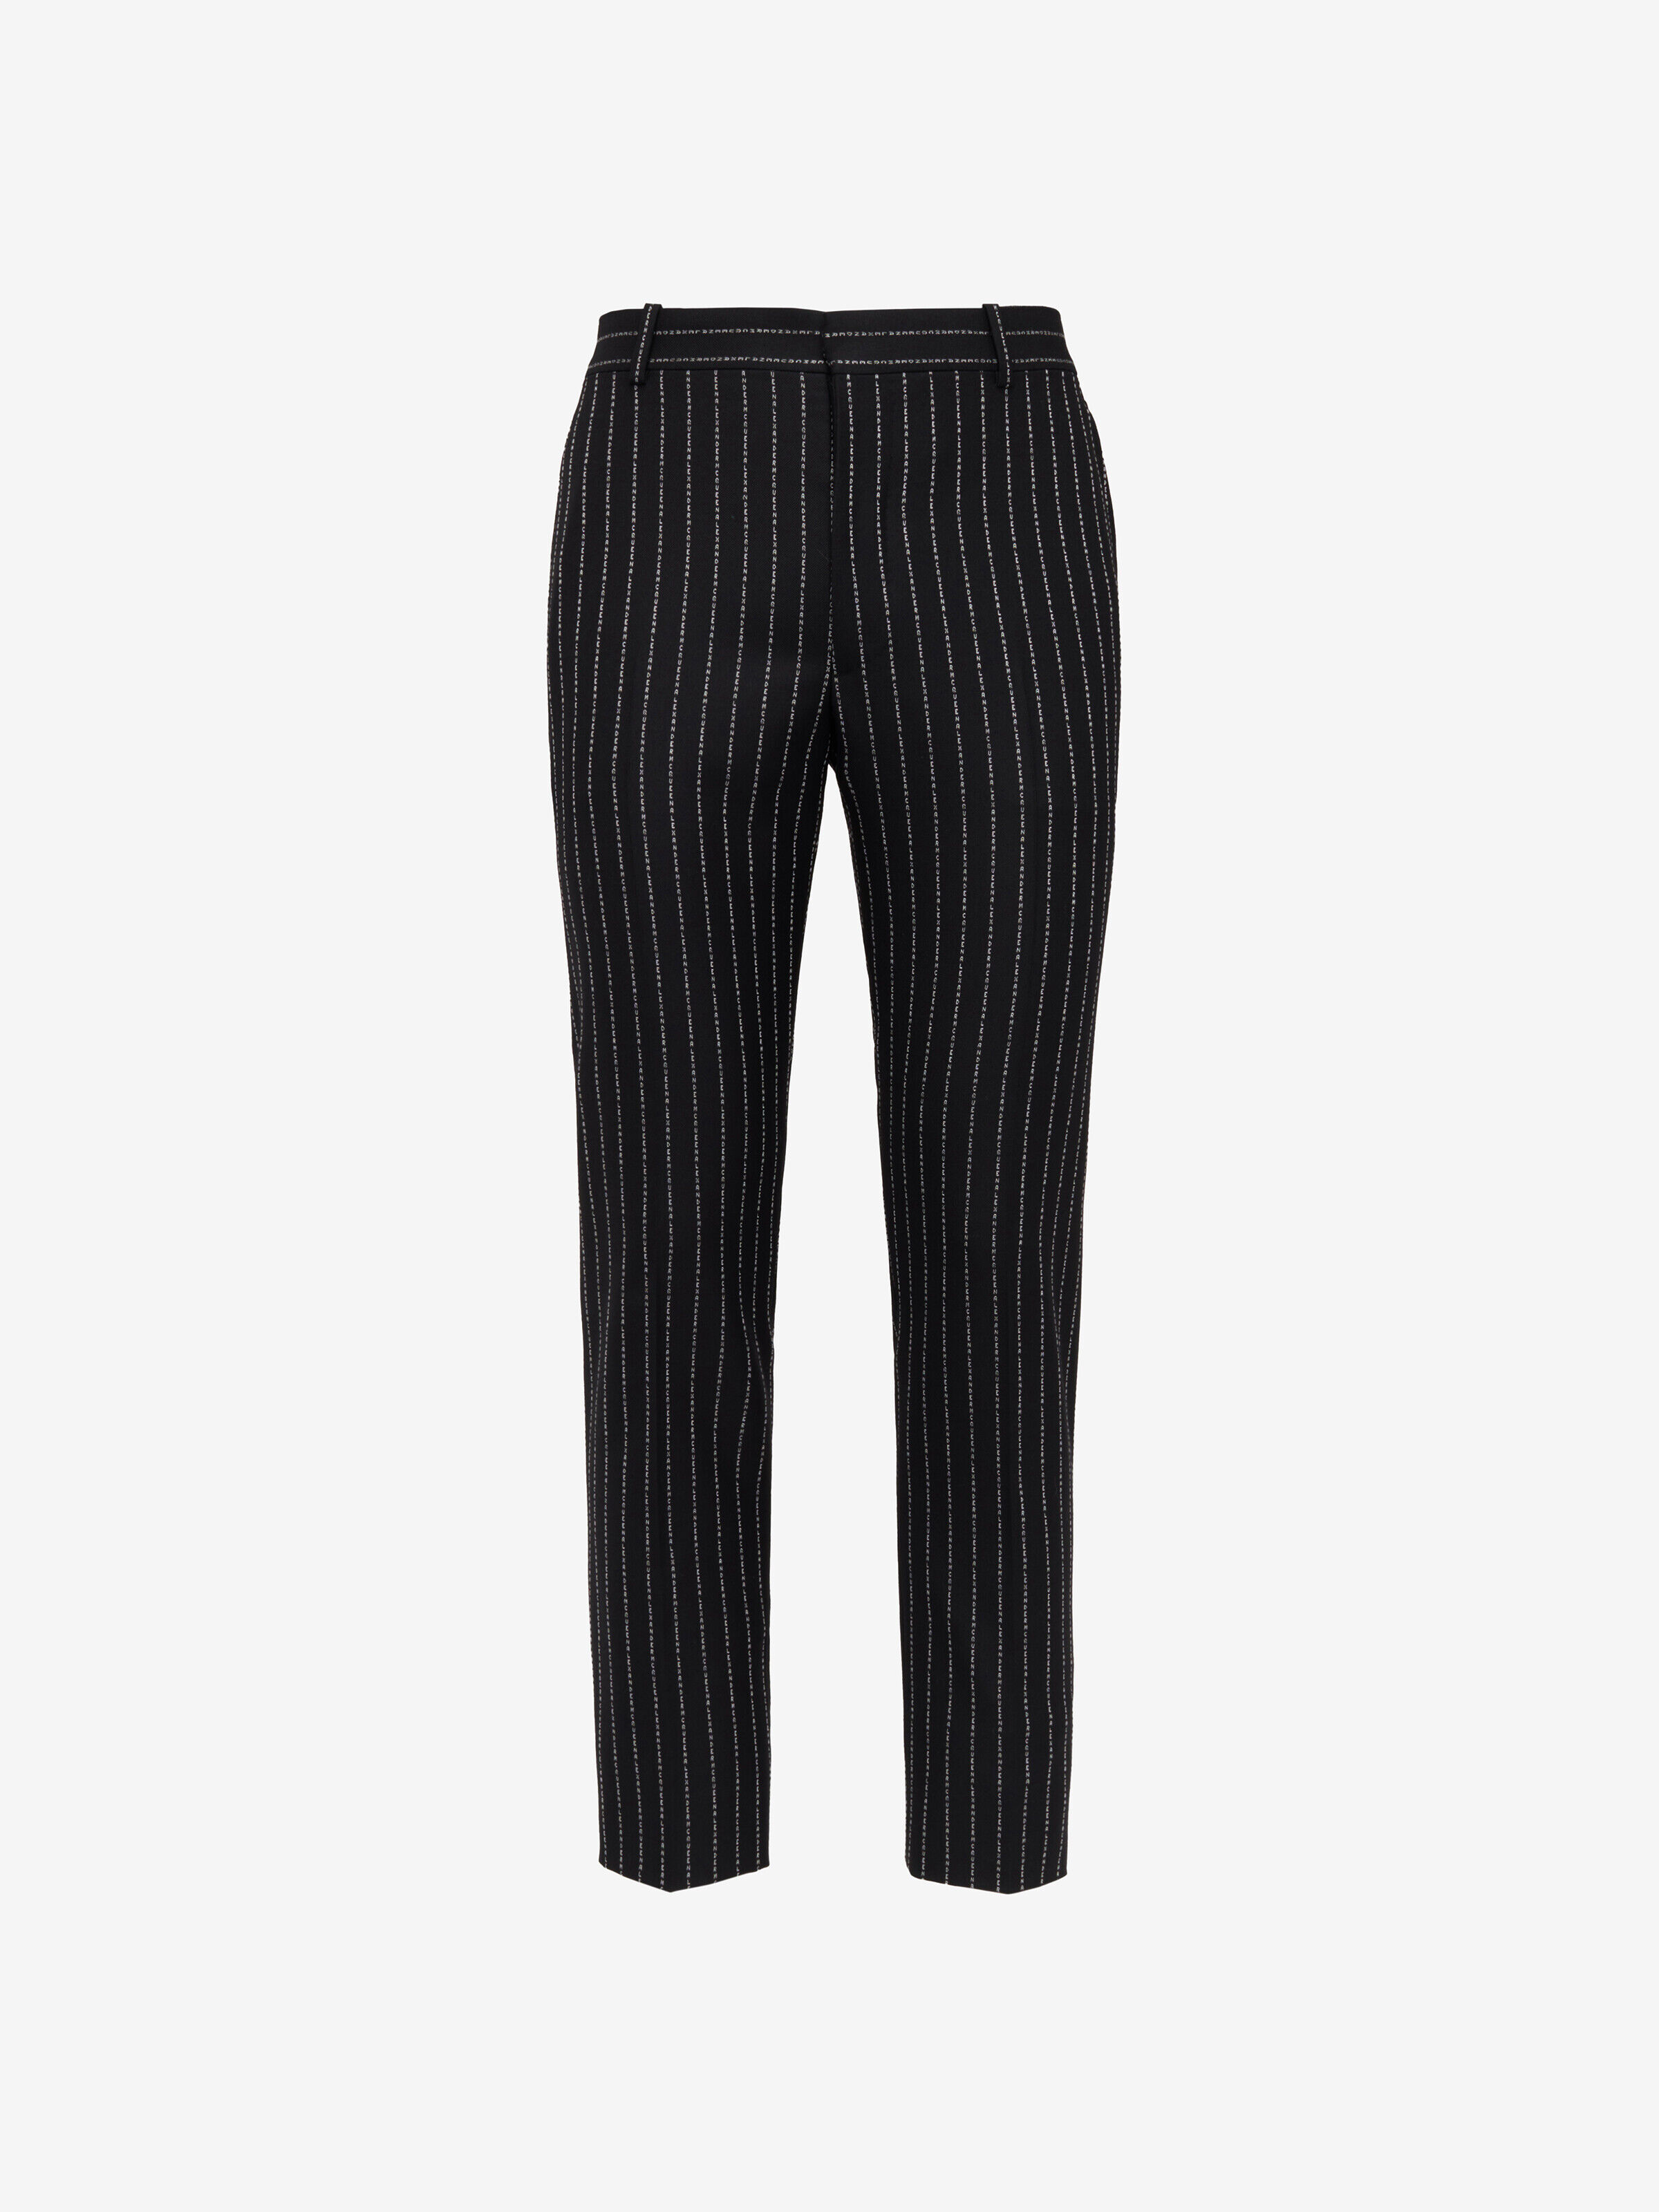 ZARA Navy Blue/White Striped High Waisted Cuffed Stretchy Cigarette Pants S  | eBay